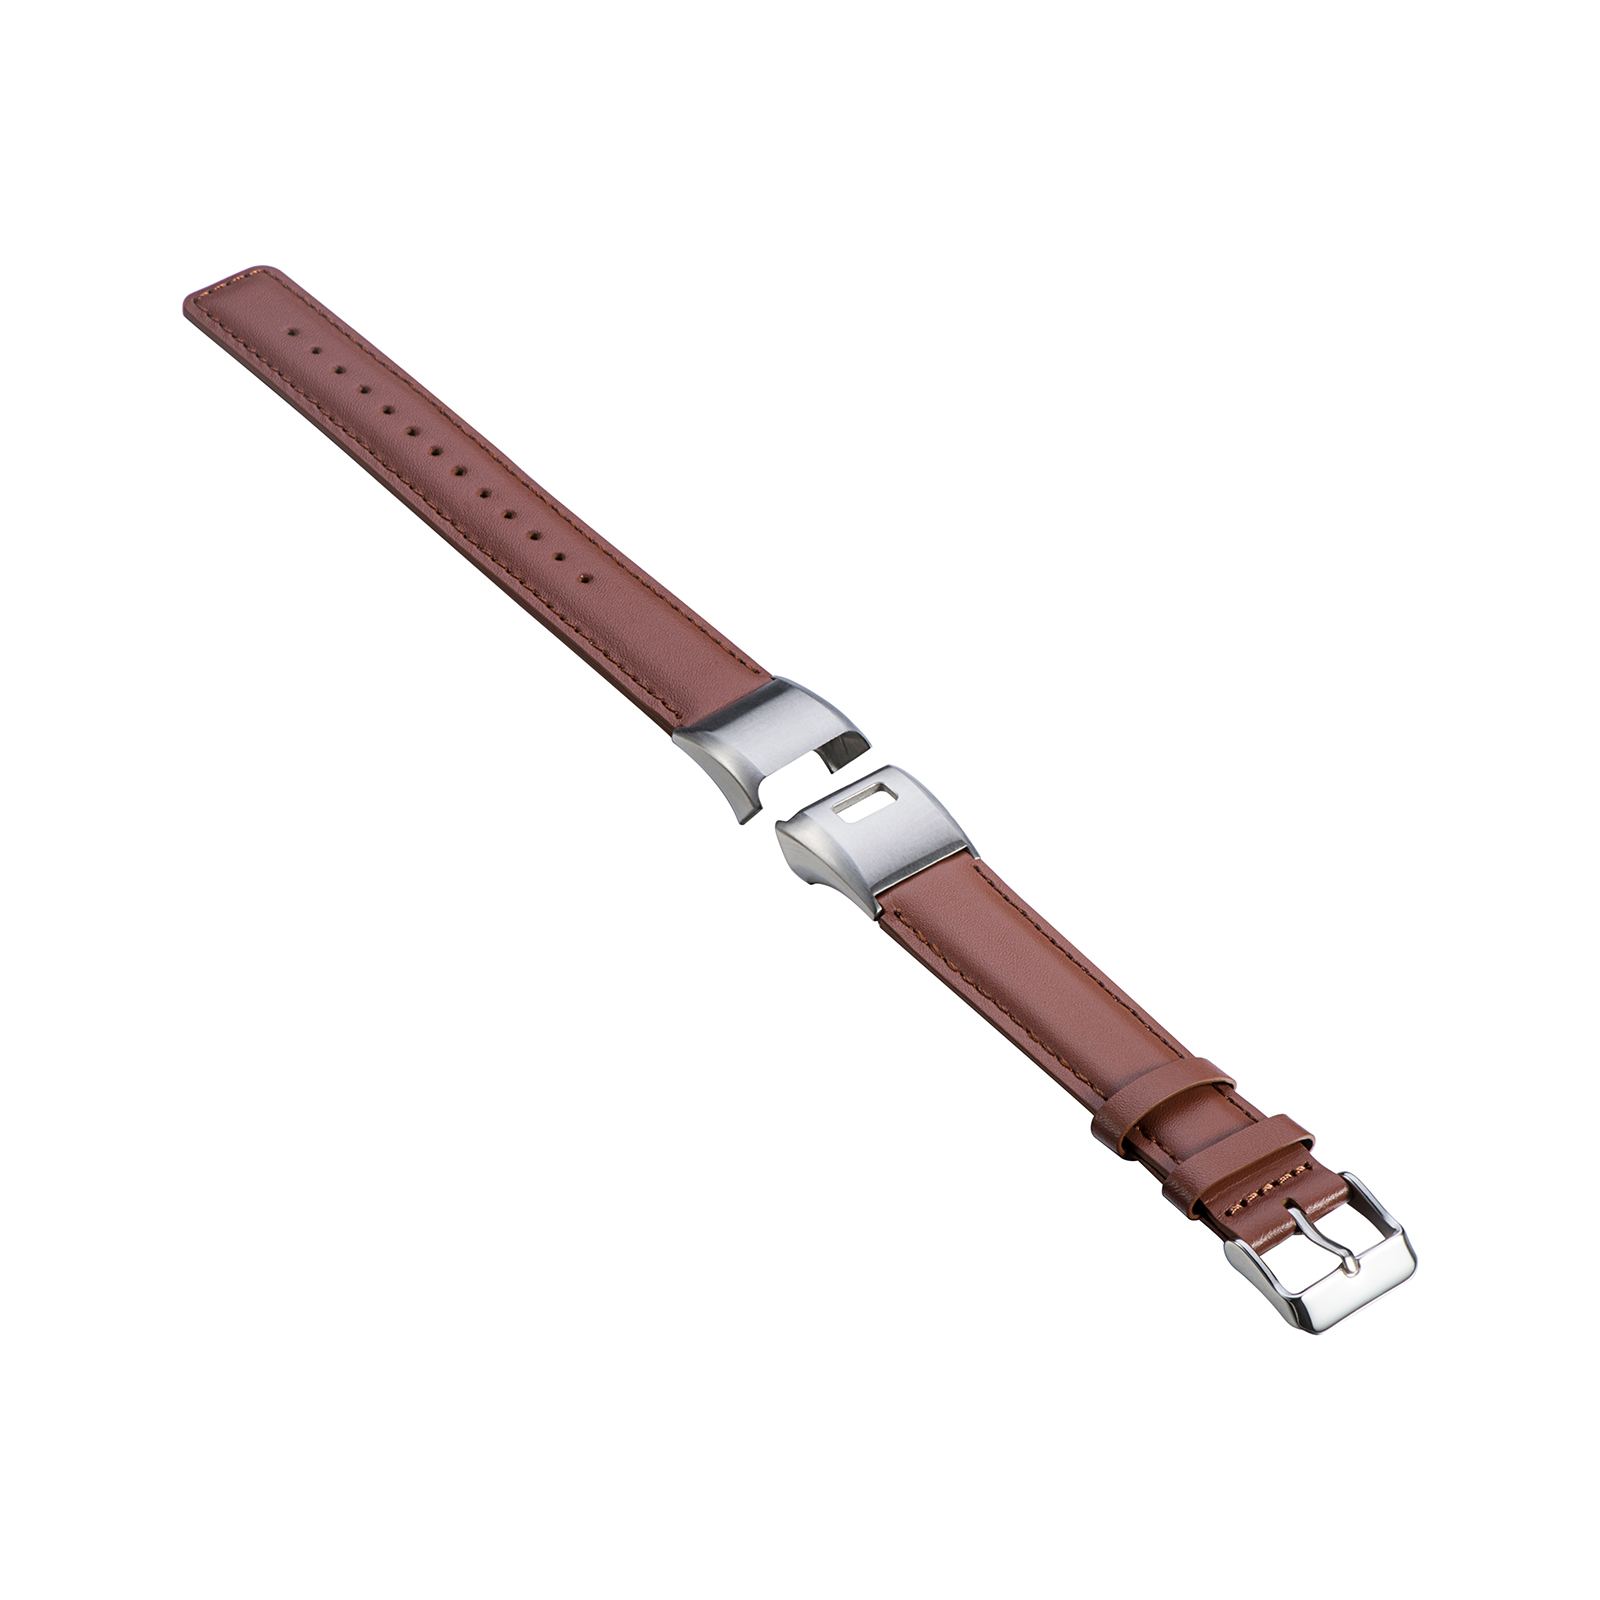 Bakeey-Retro-Metal-Buckle-Leather-Strap-Smart-Watch-Band-For-Garmin-Vivosmart-HR-1739351-6